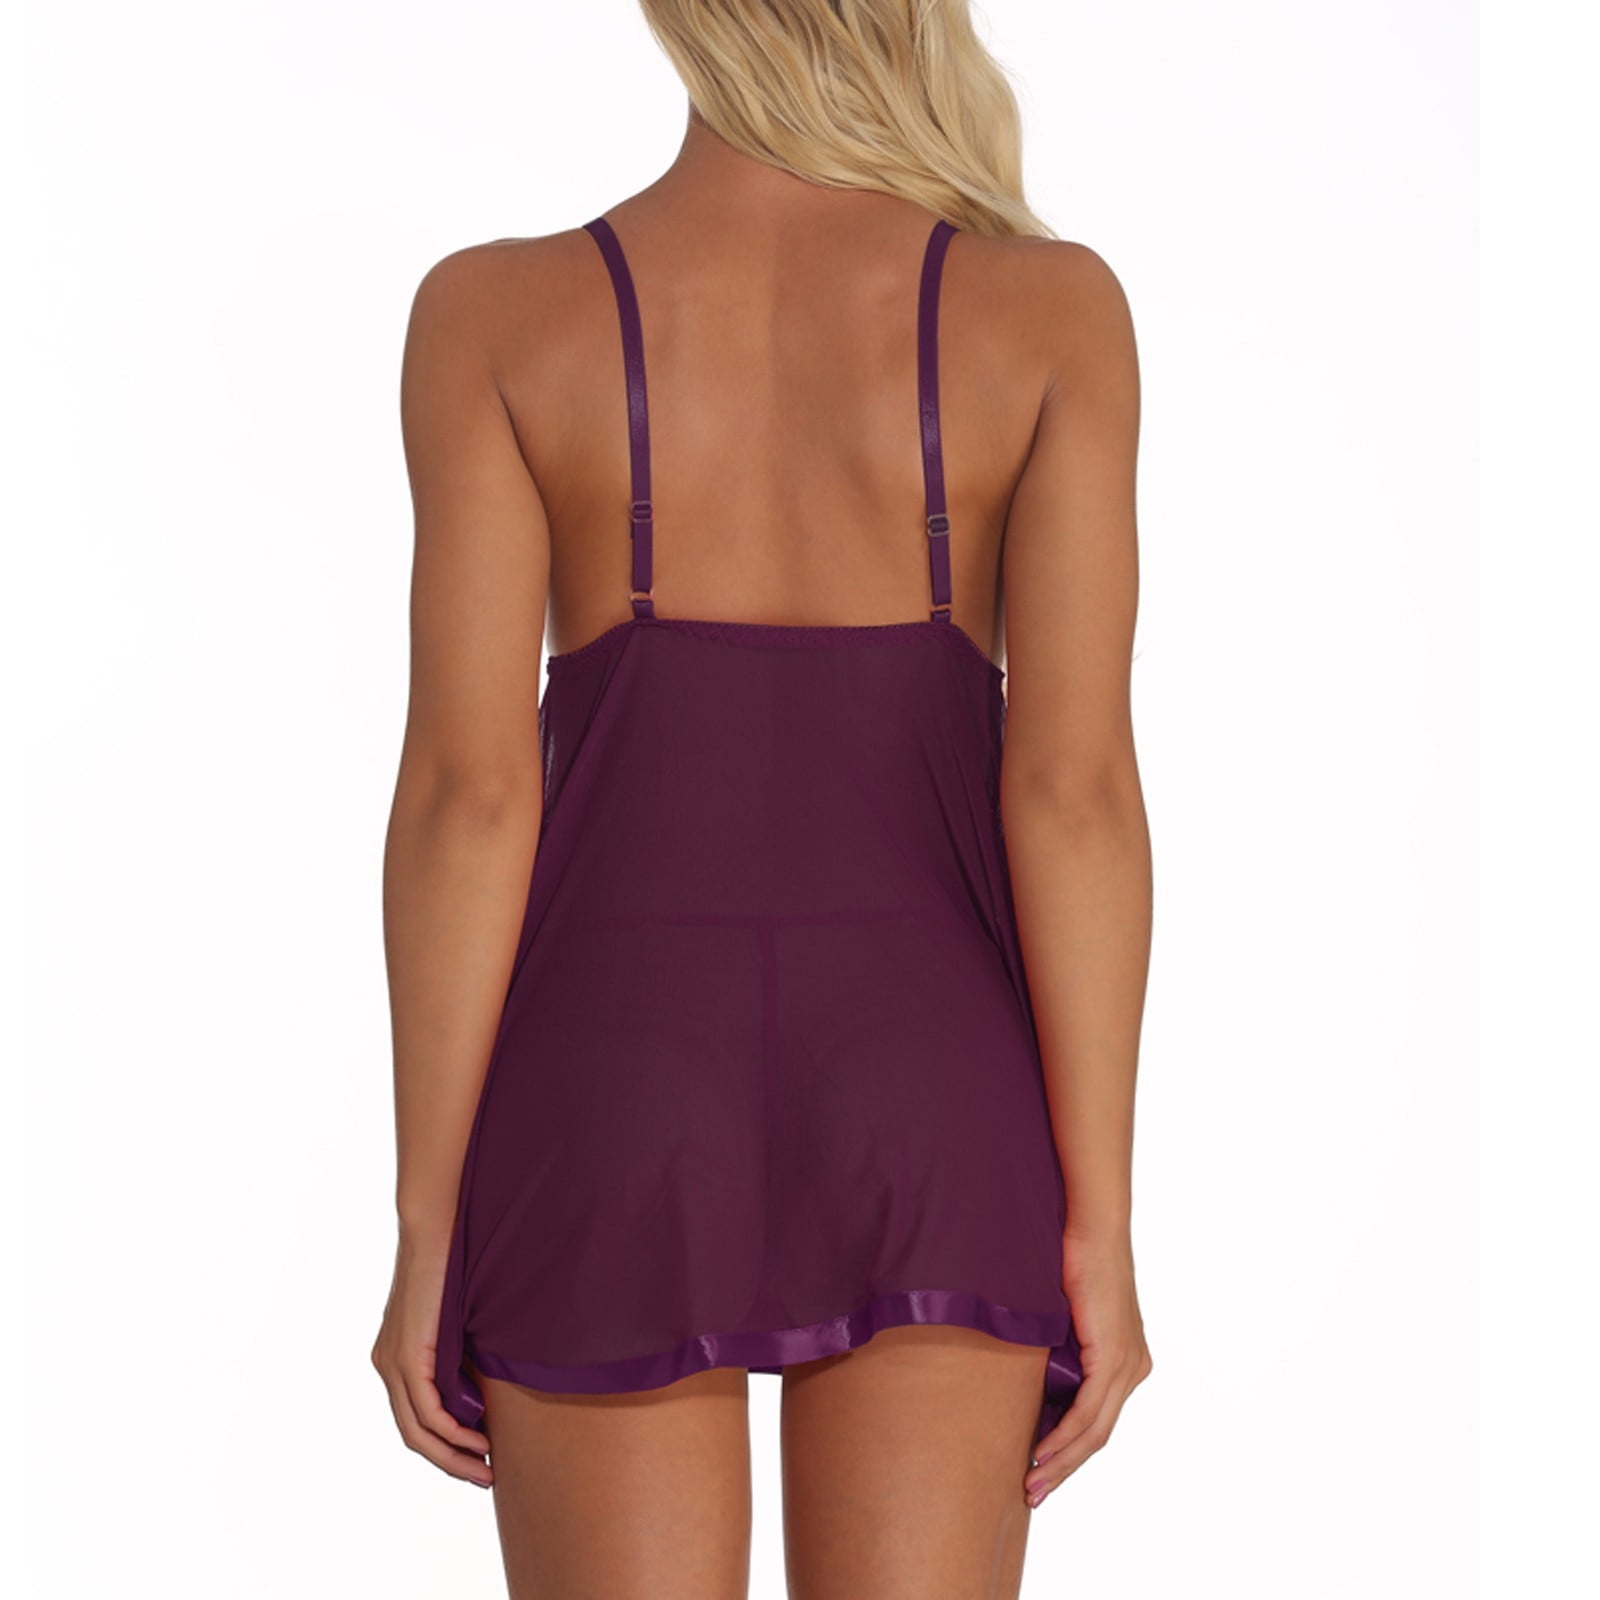 YYDGH Women's Plus Size Lace Mesh Sexy Babydoll Lingerie Split Dress  Chemise with Panty Set Nightgown Purple XL